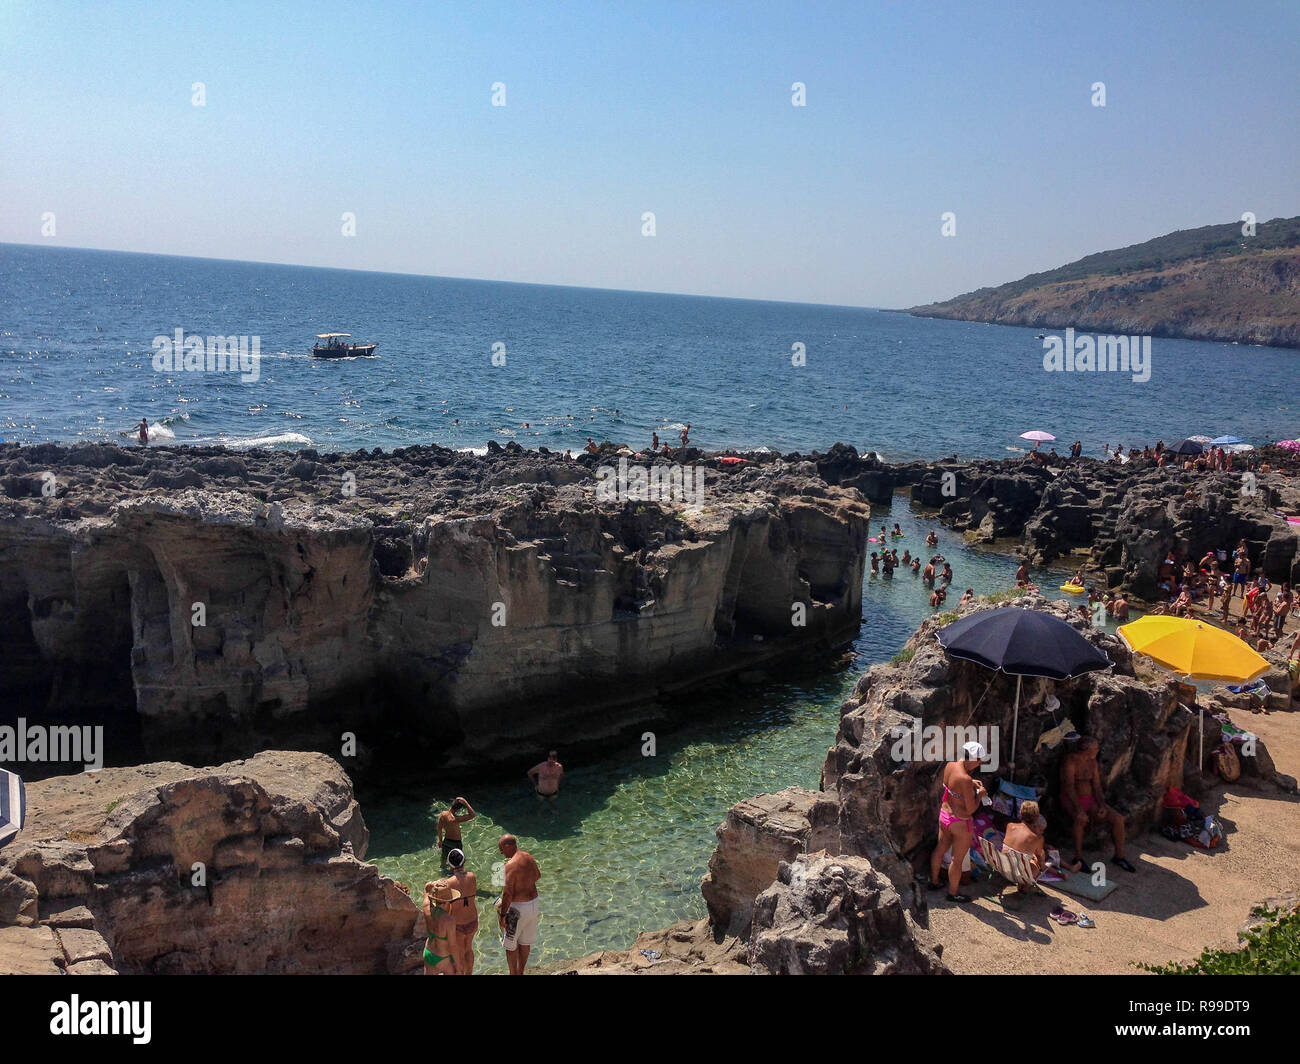 Fun at the sea in Tricase, Apulia - Italy Stock Photo